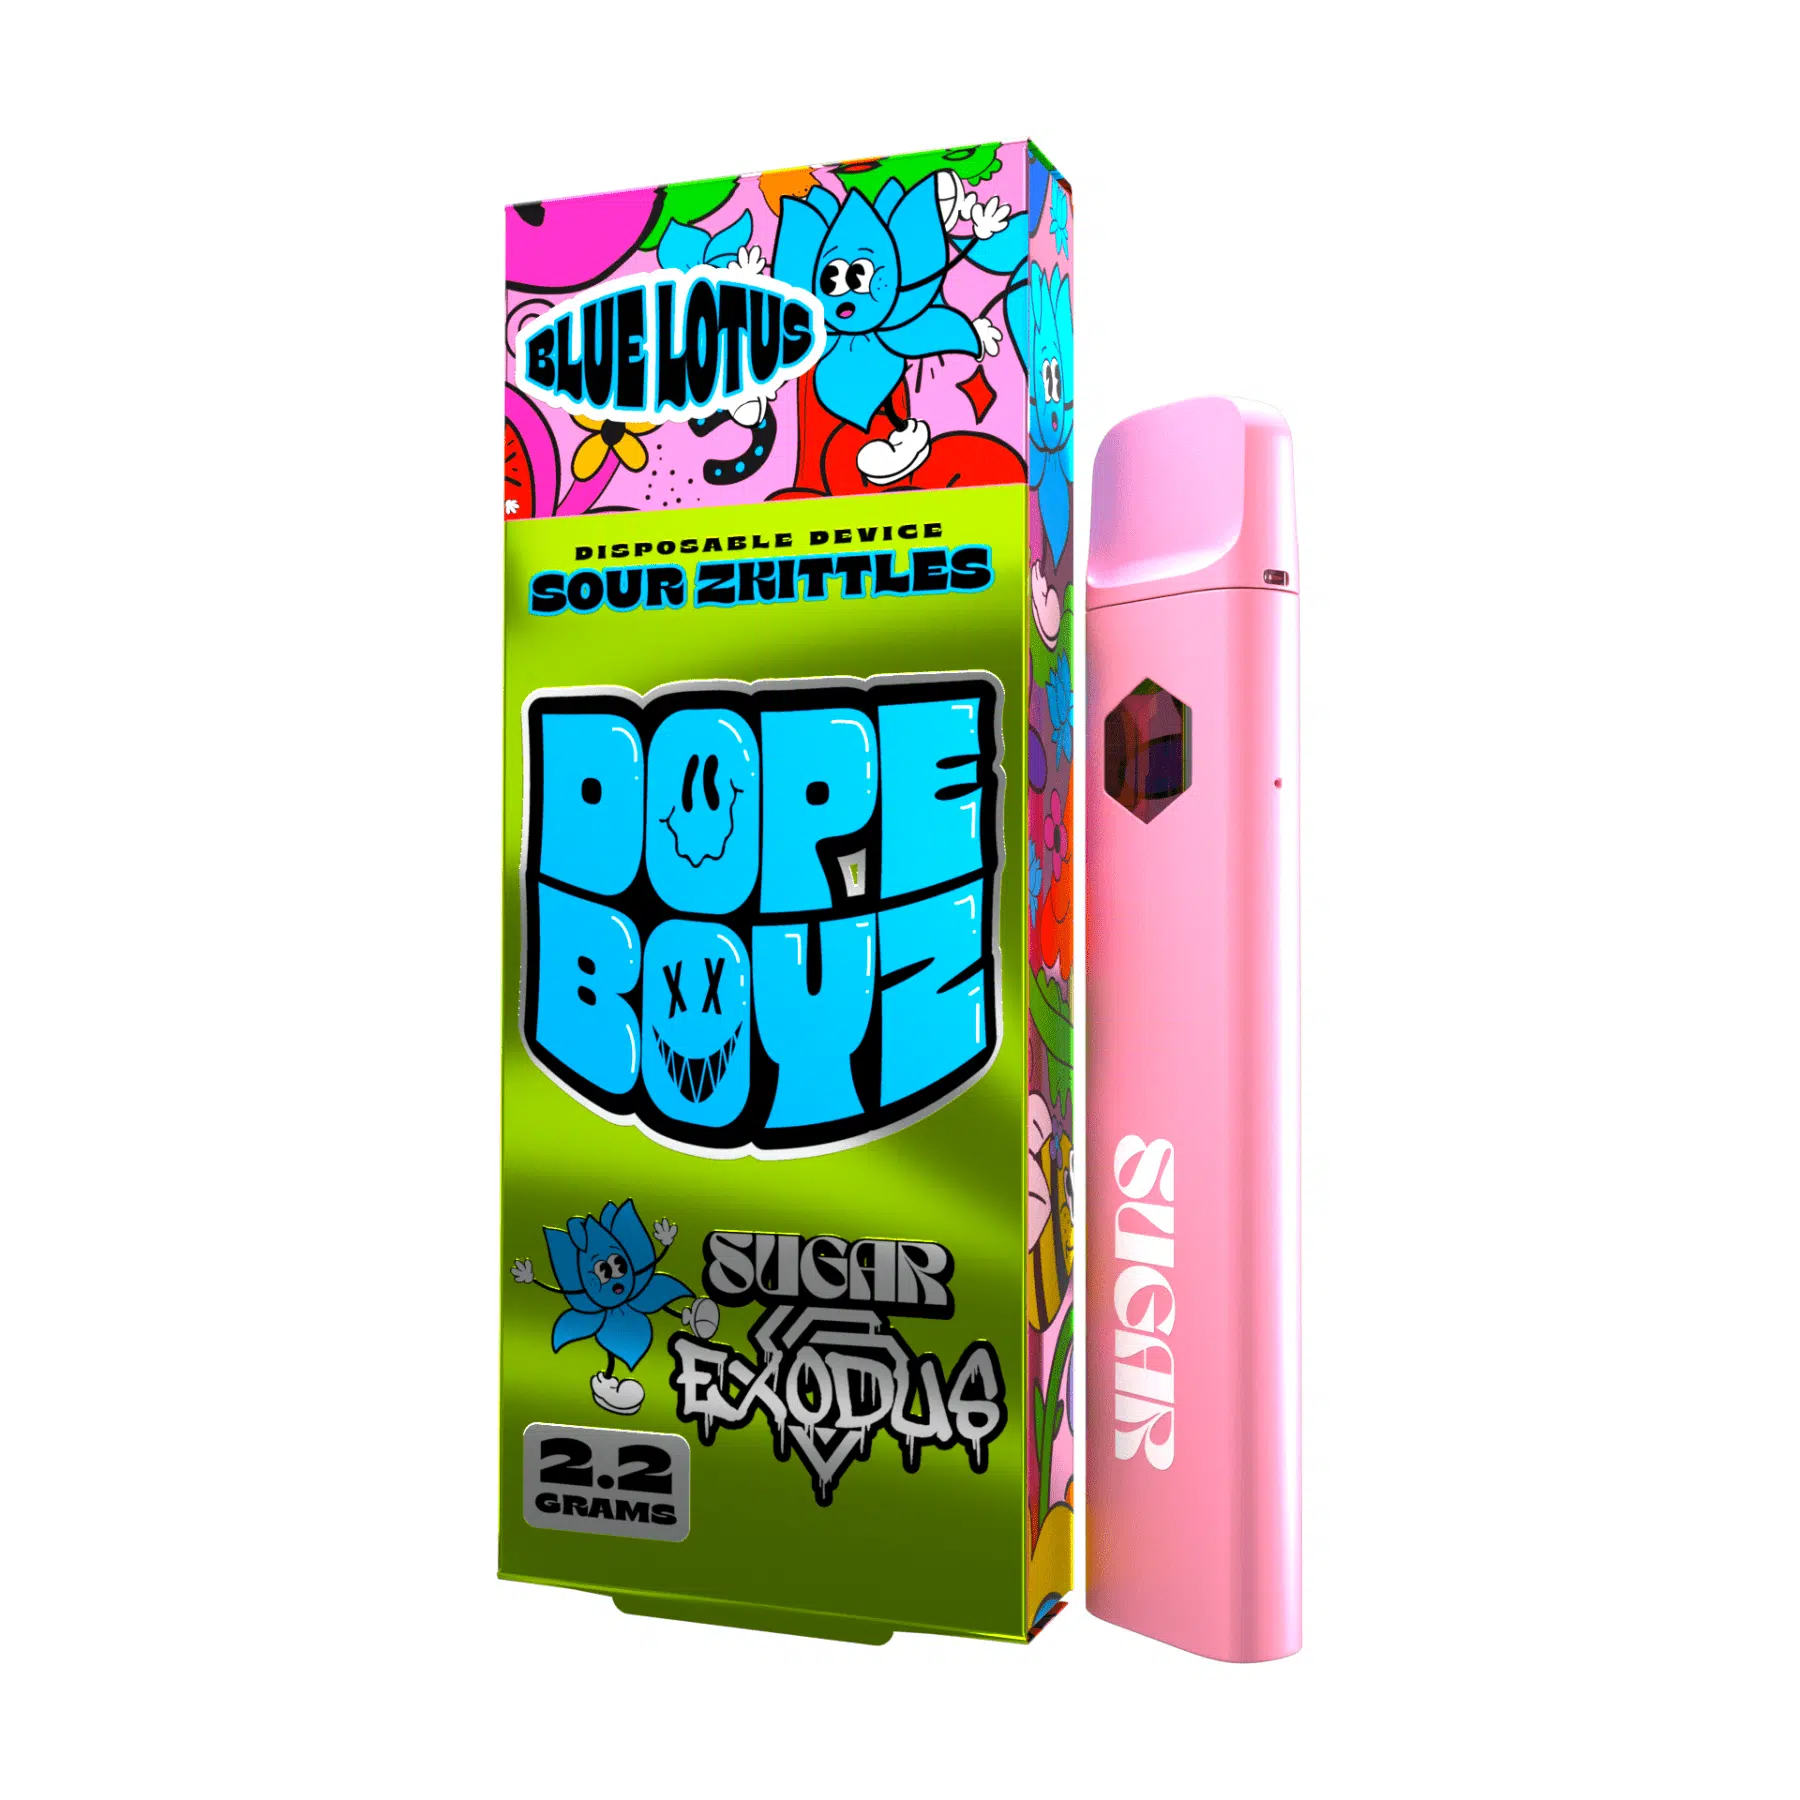 a pink box with a pink Sugar Exodus Dope Boyz Blue Lotus Disposables (2.2g) e-liquid.